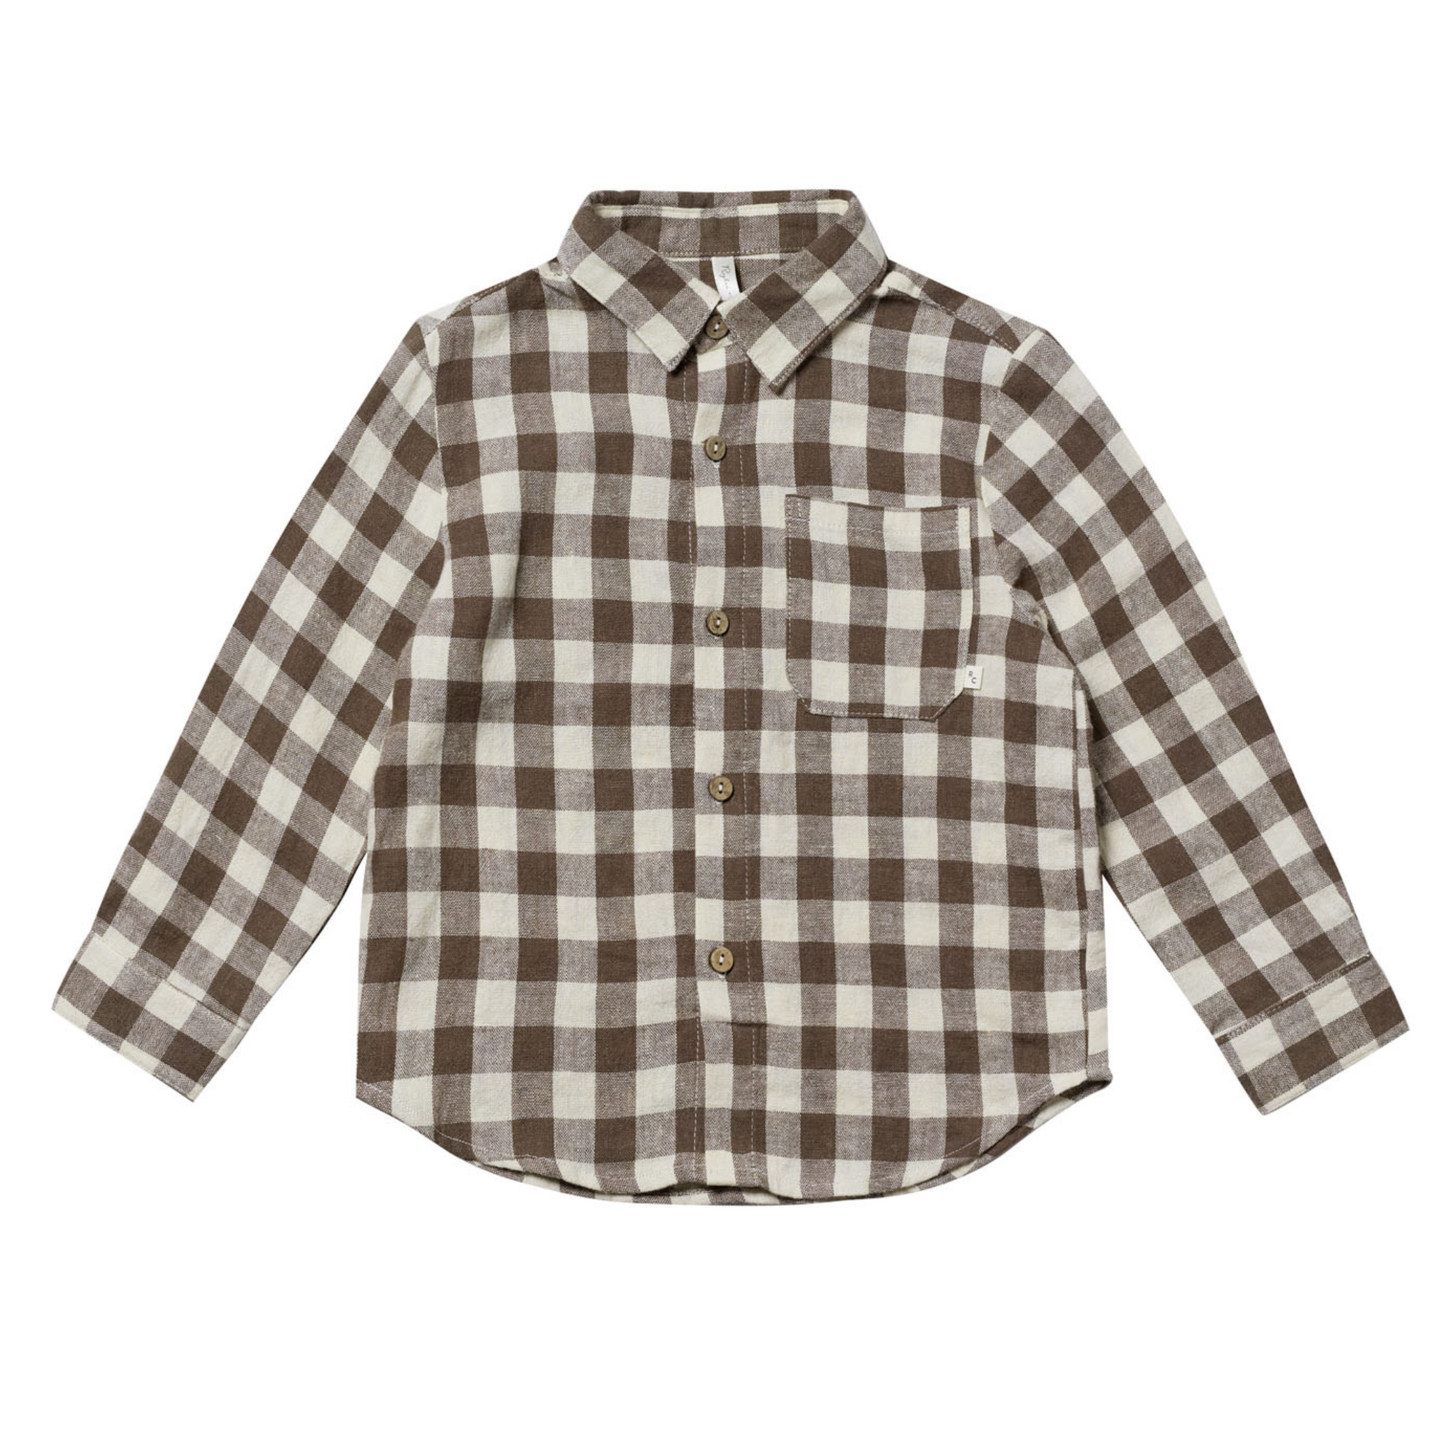 Rylee & Cru Long Sleeve Collared Shirt, Charcoal Check